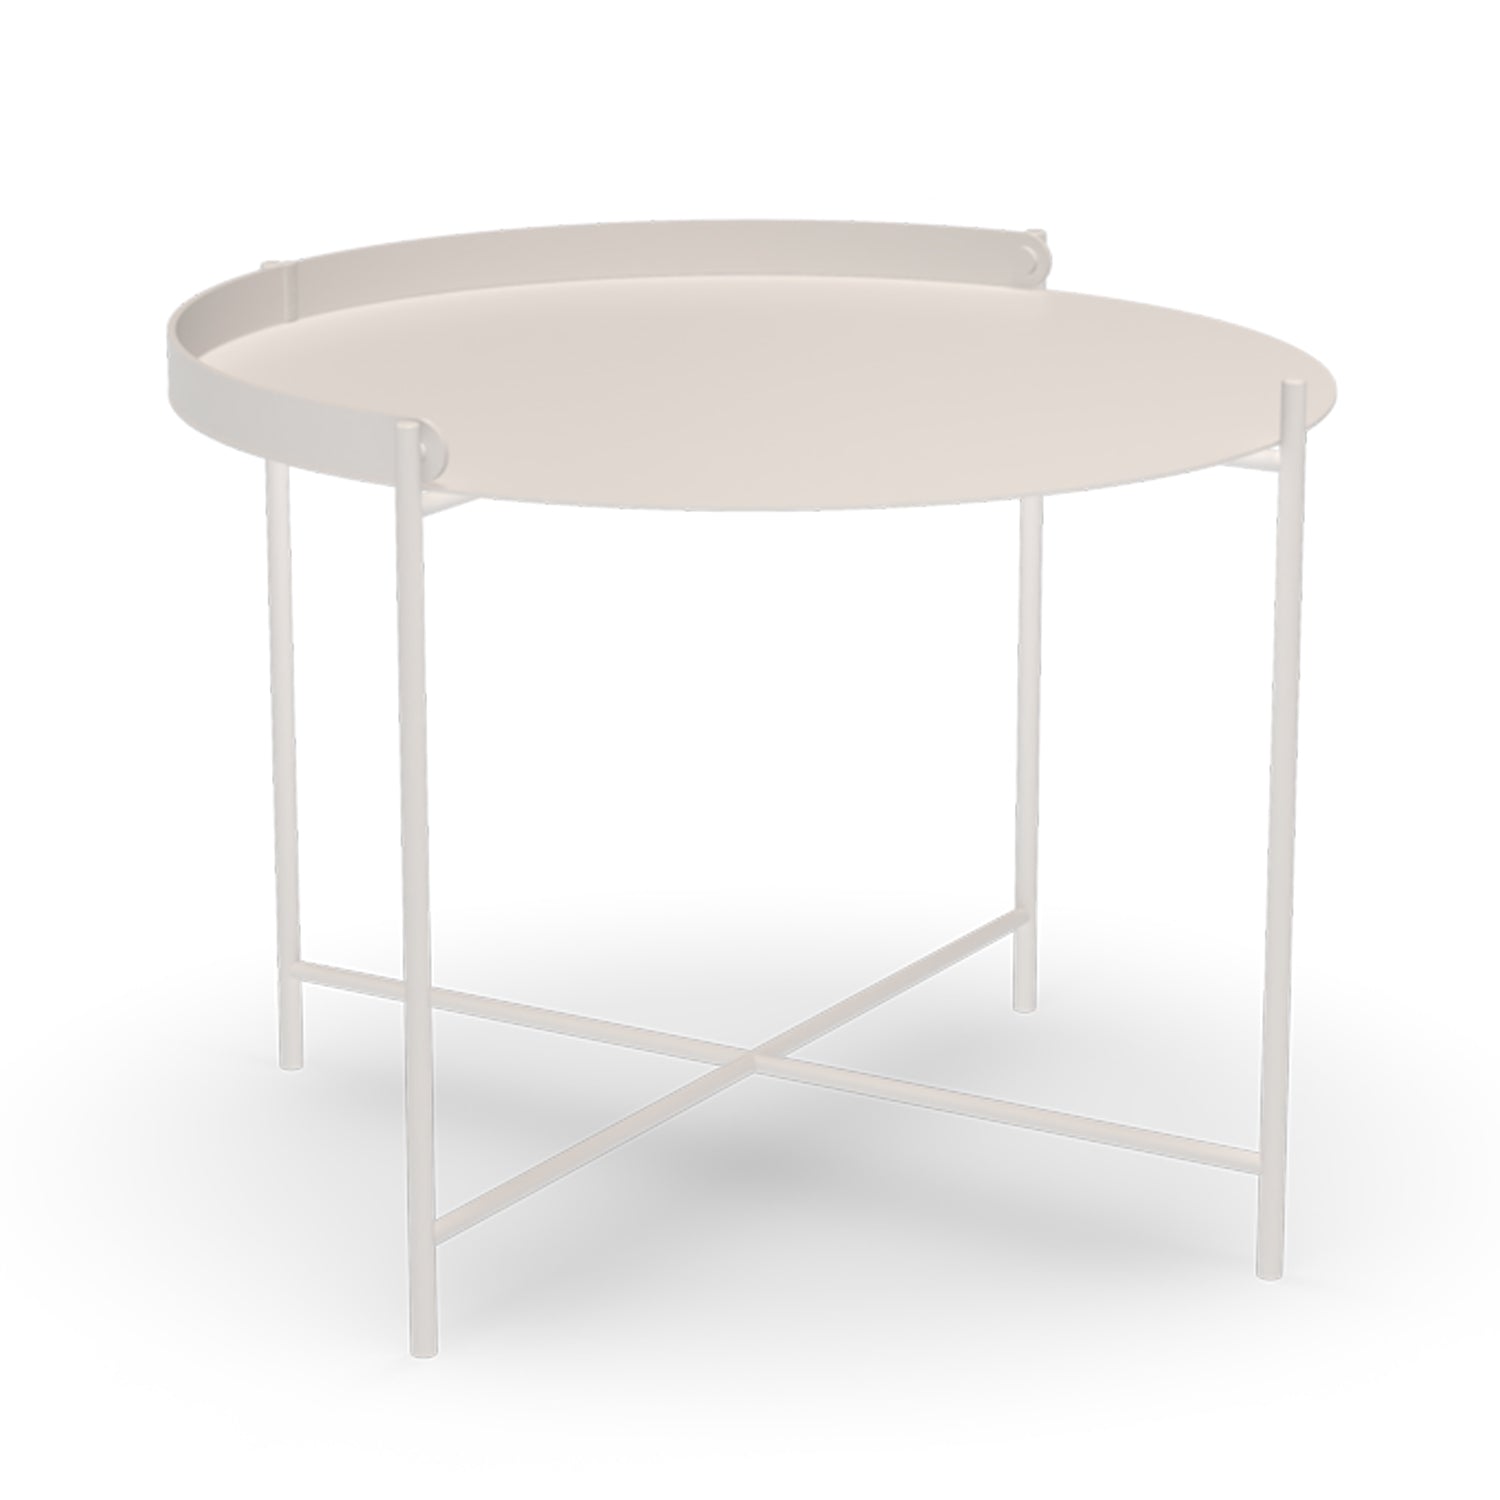 Edge Tray Table 62 - The Design Choice